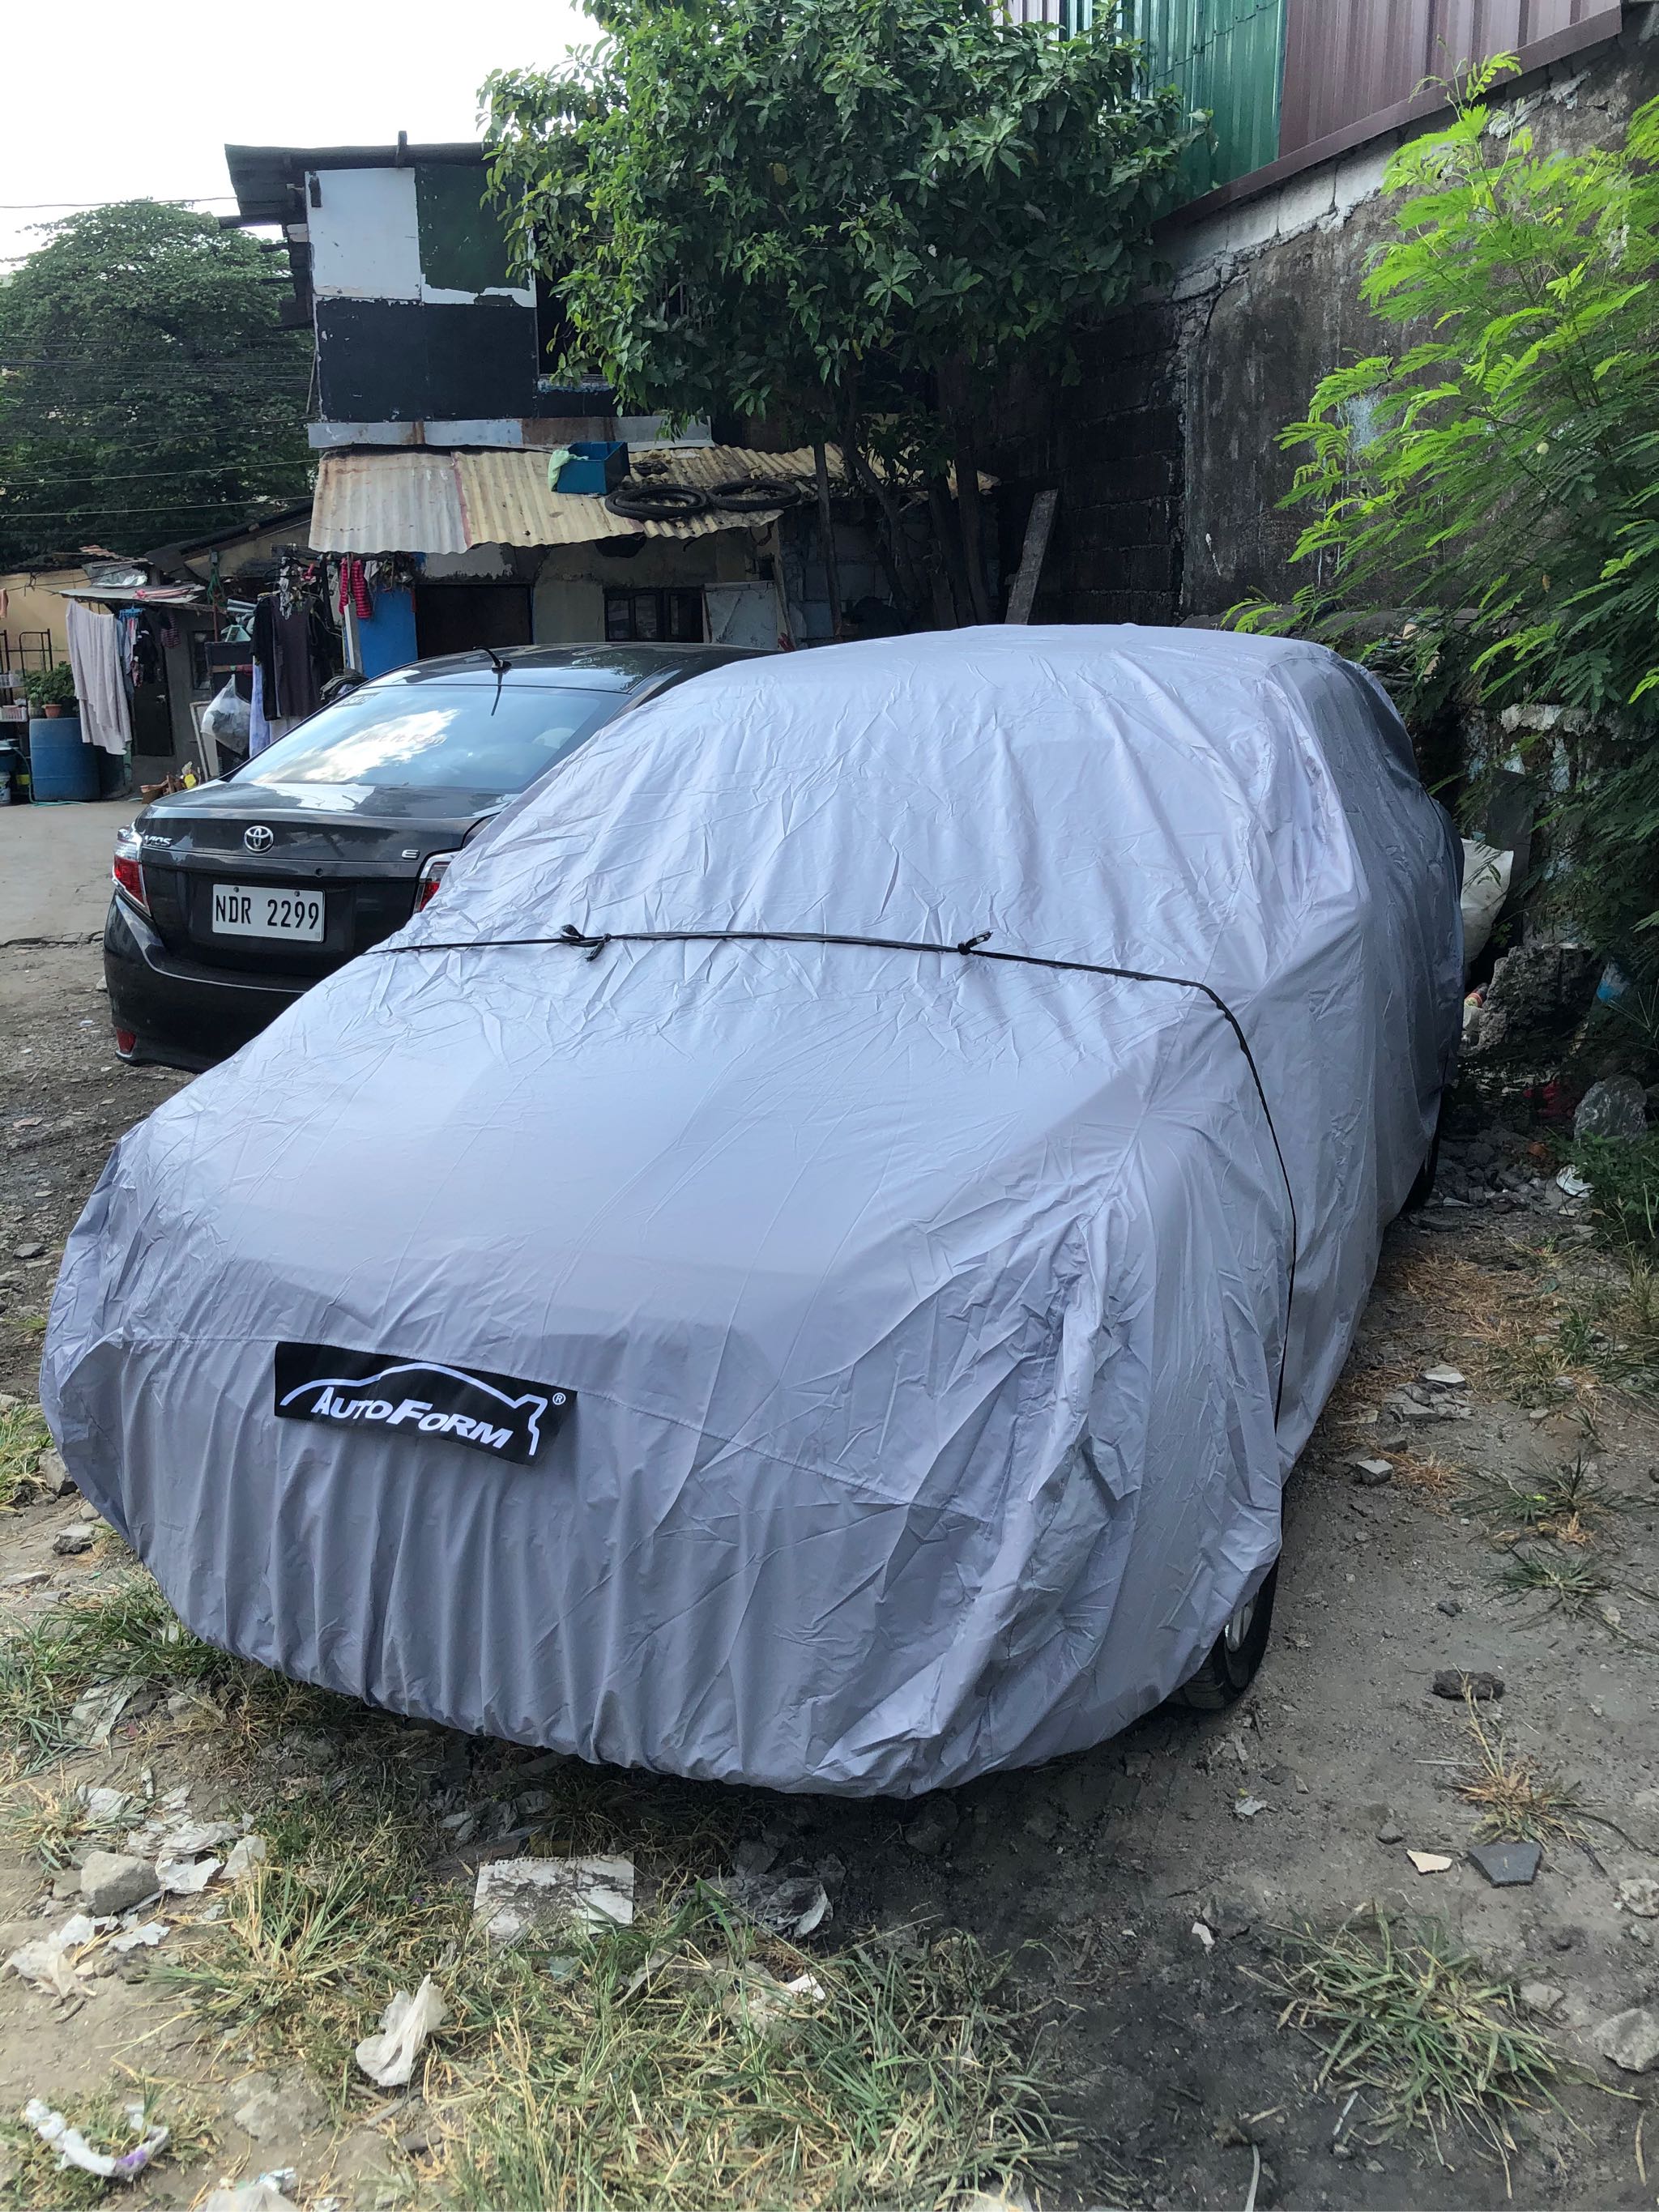 Autoform 100CC-S 100% Waterproof Semi-Custom Car Cover - Small for